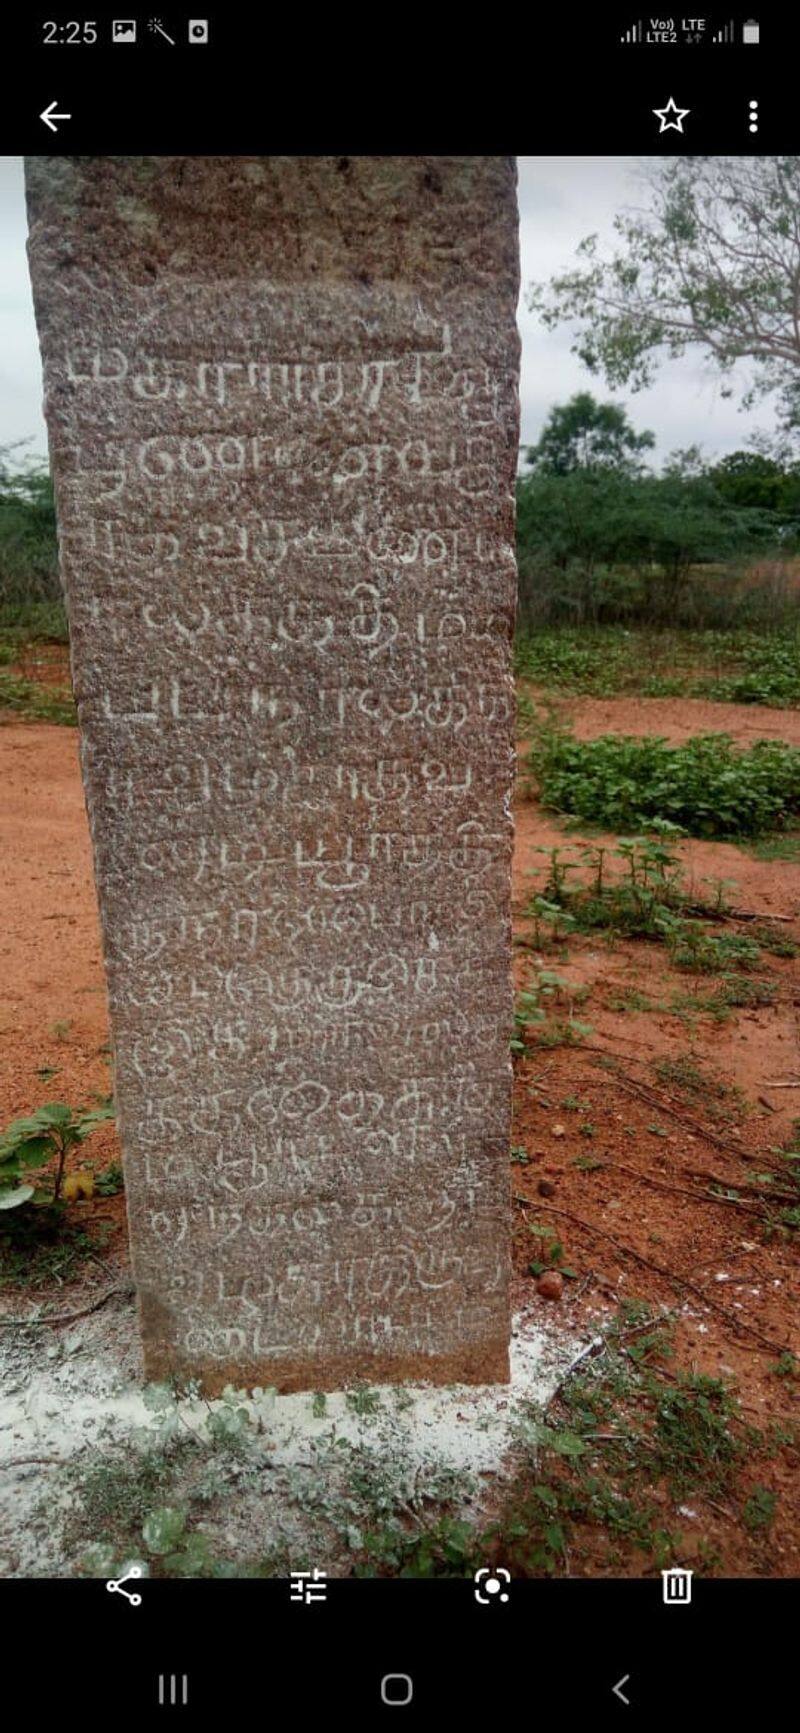 Discovery of 16th century Nayakar inscription near Sivagangai .